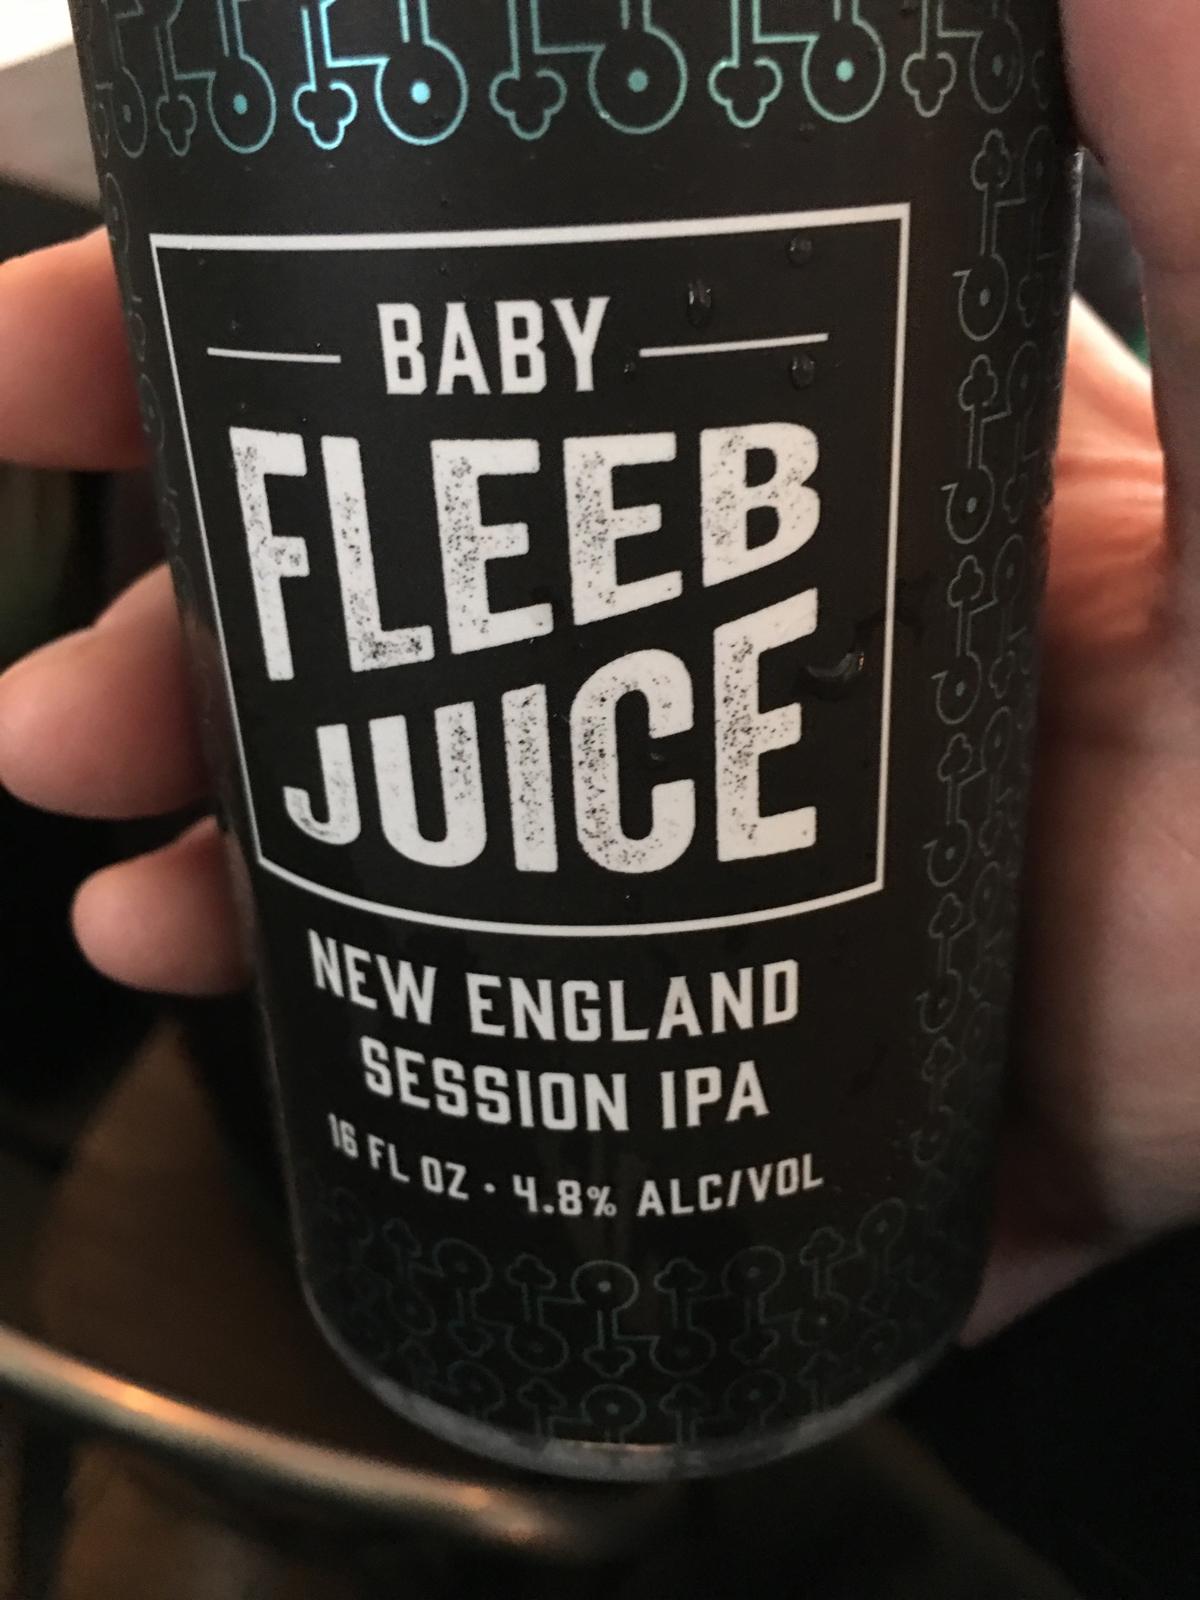 Baby Fleeb Juice